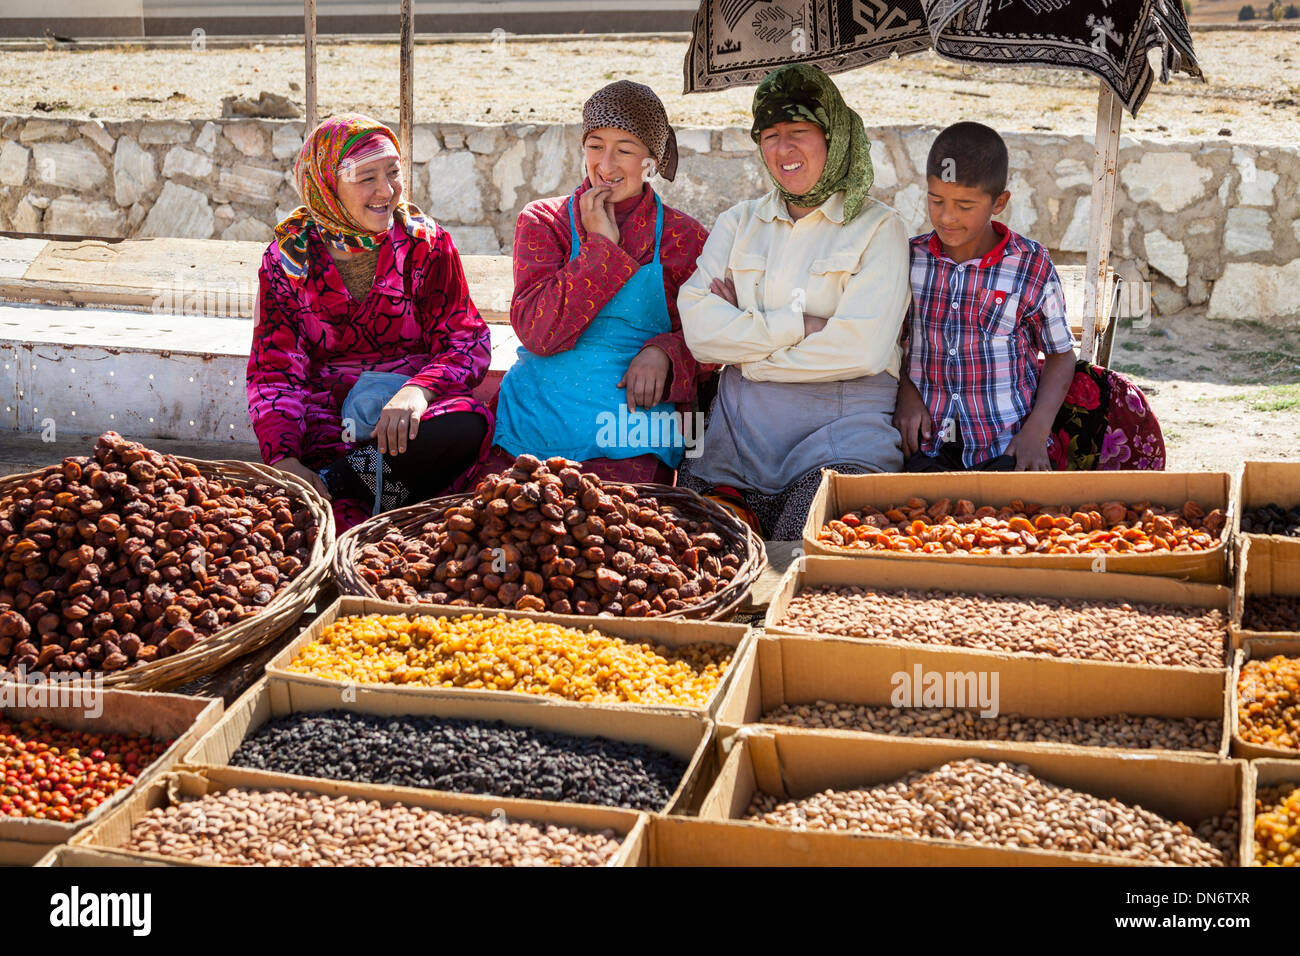 Women selling food in an outdoor market, near Samarkand, Uzbekistan Stock Photo